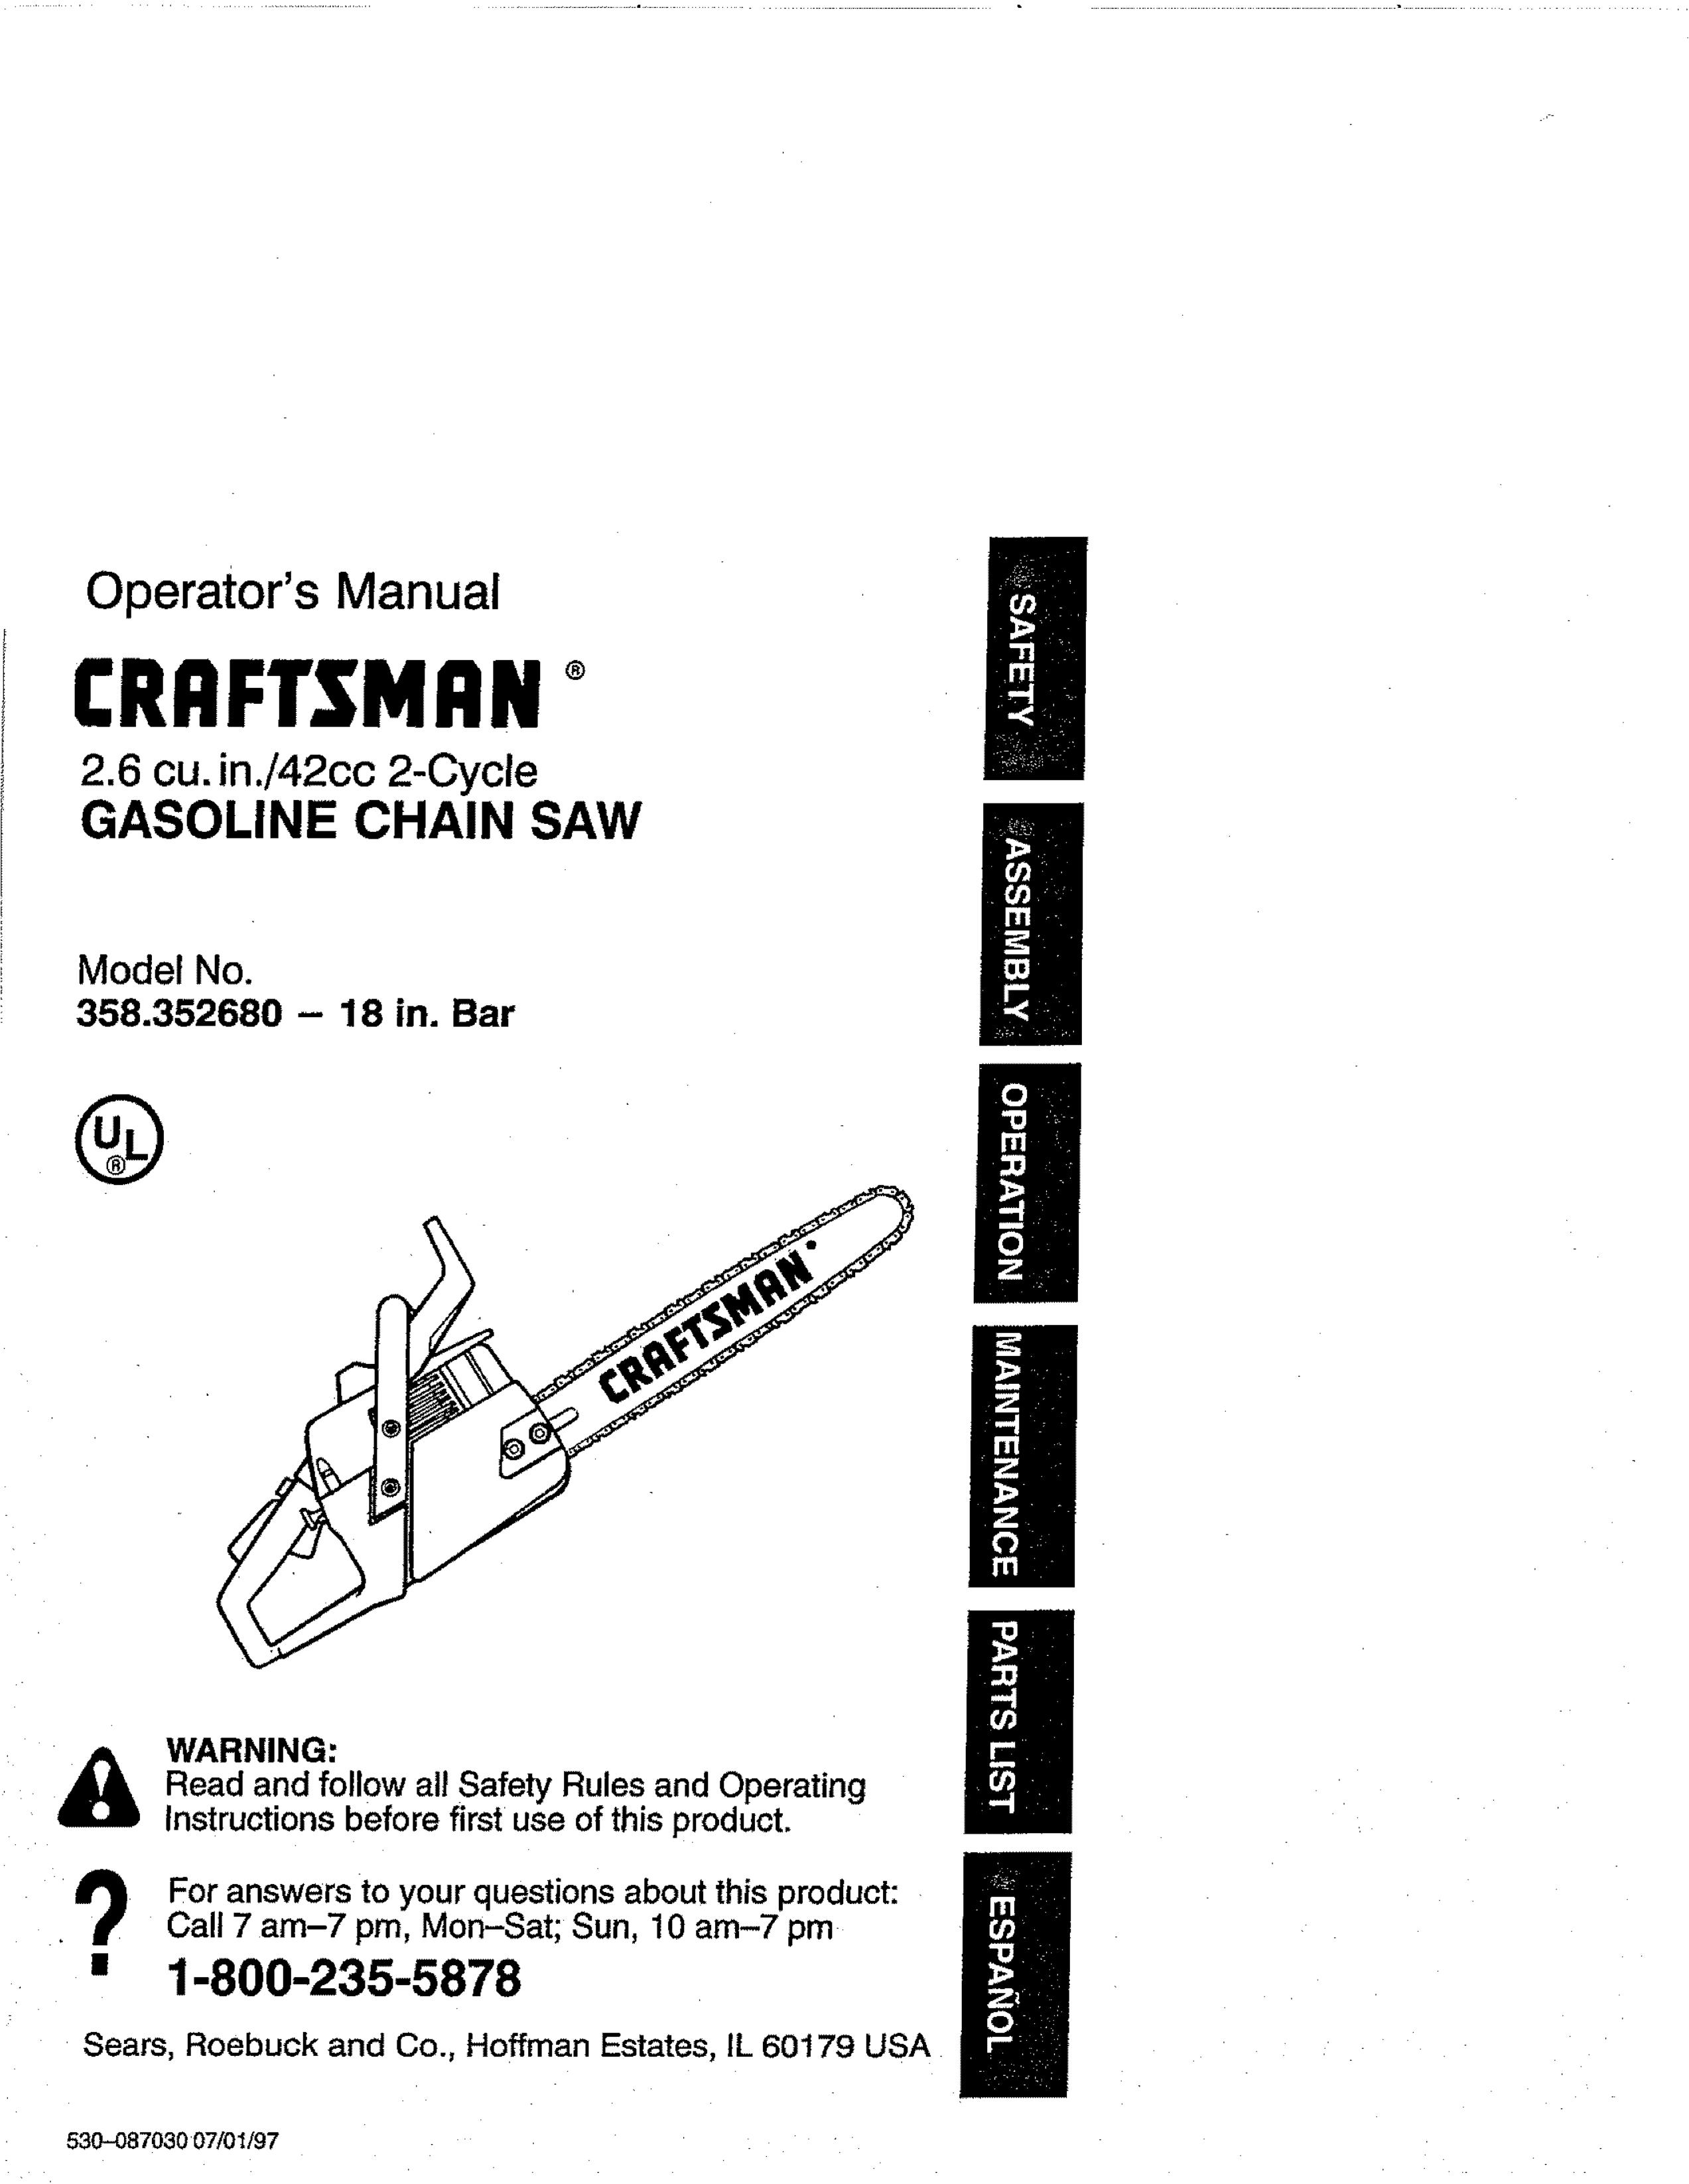 Craftsman 358.352680 - 18 IN. BAR Chainsaw User Manual